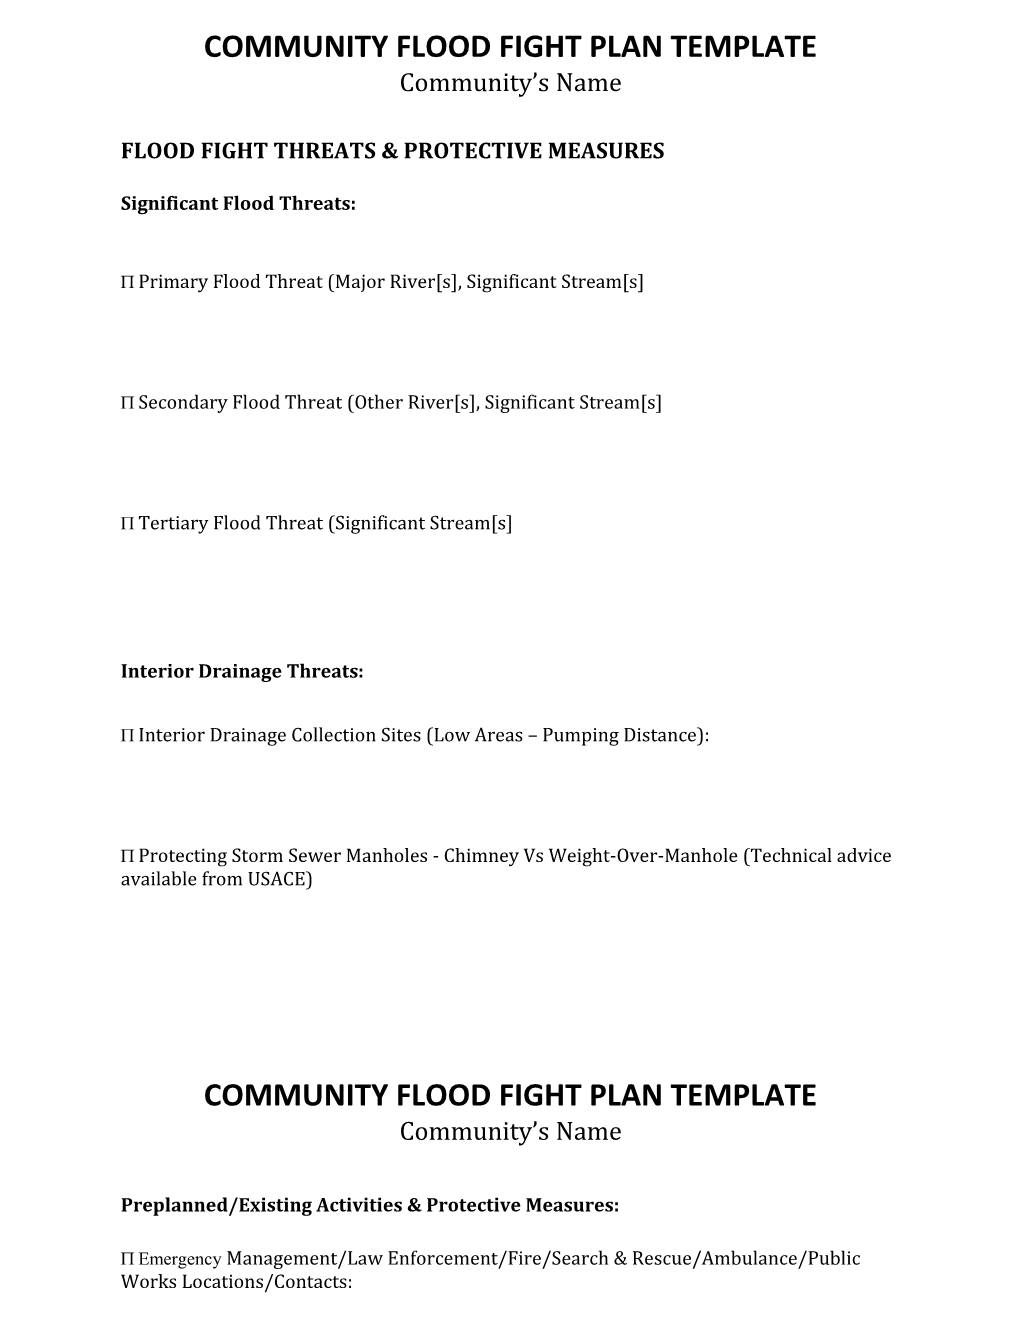 Community Flood Fight Plan Template